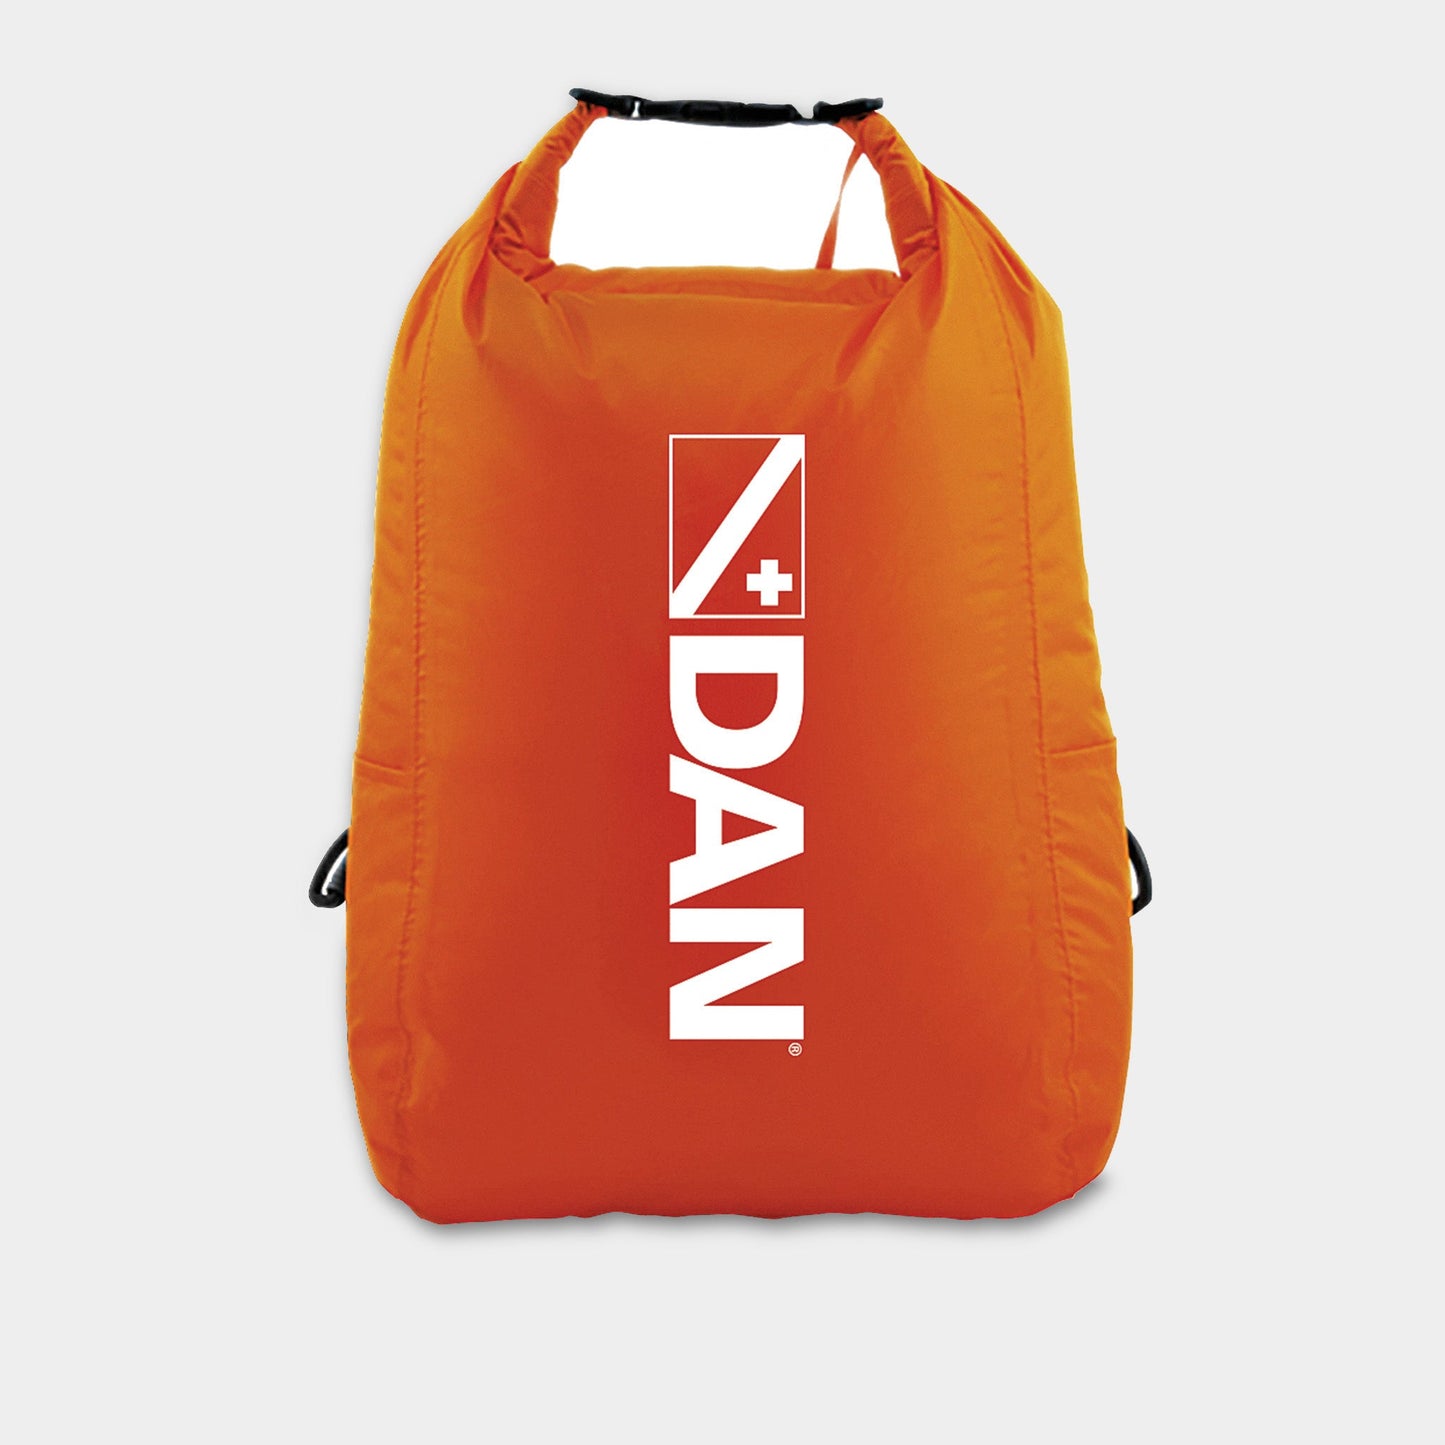 DAN 15L Nylon Compact Dry Bag w/strap